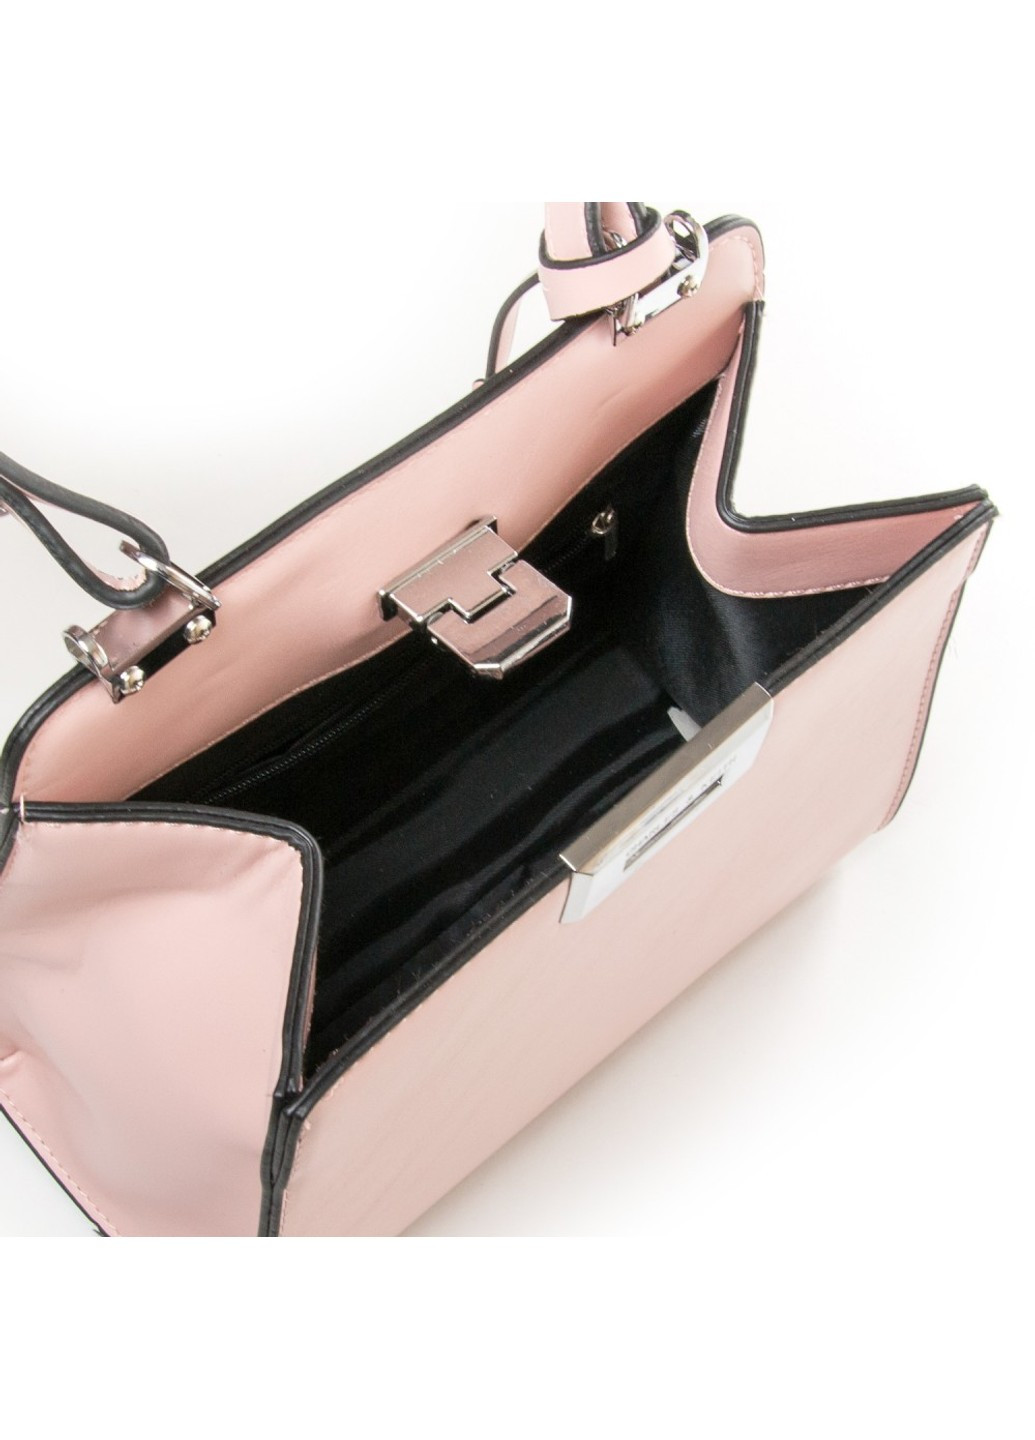 Мода жіноча сумочка мода 04-02 11003 рожева Fashion (261486739)